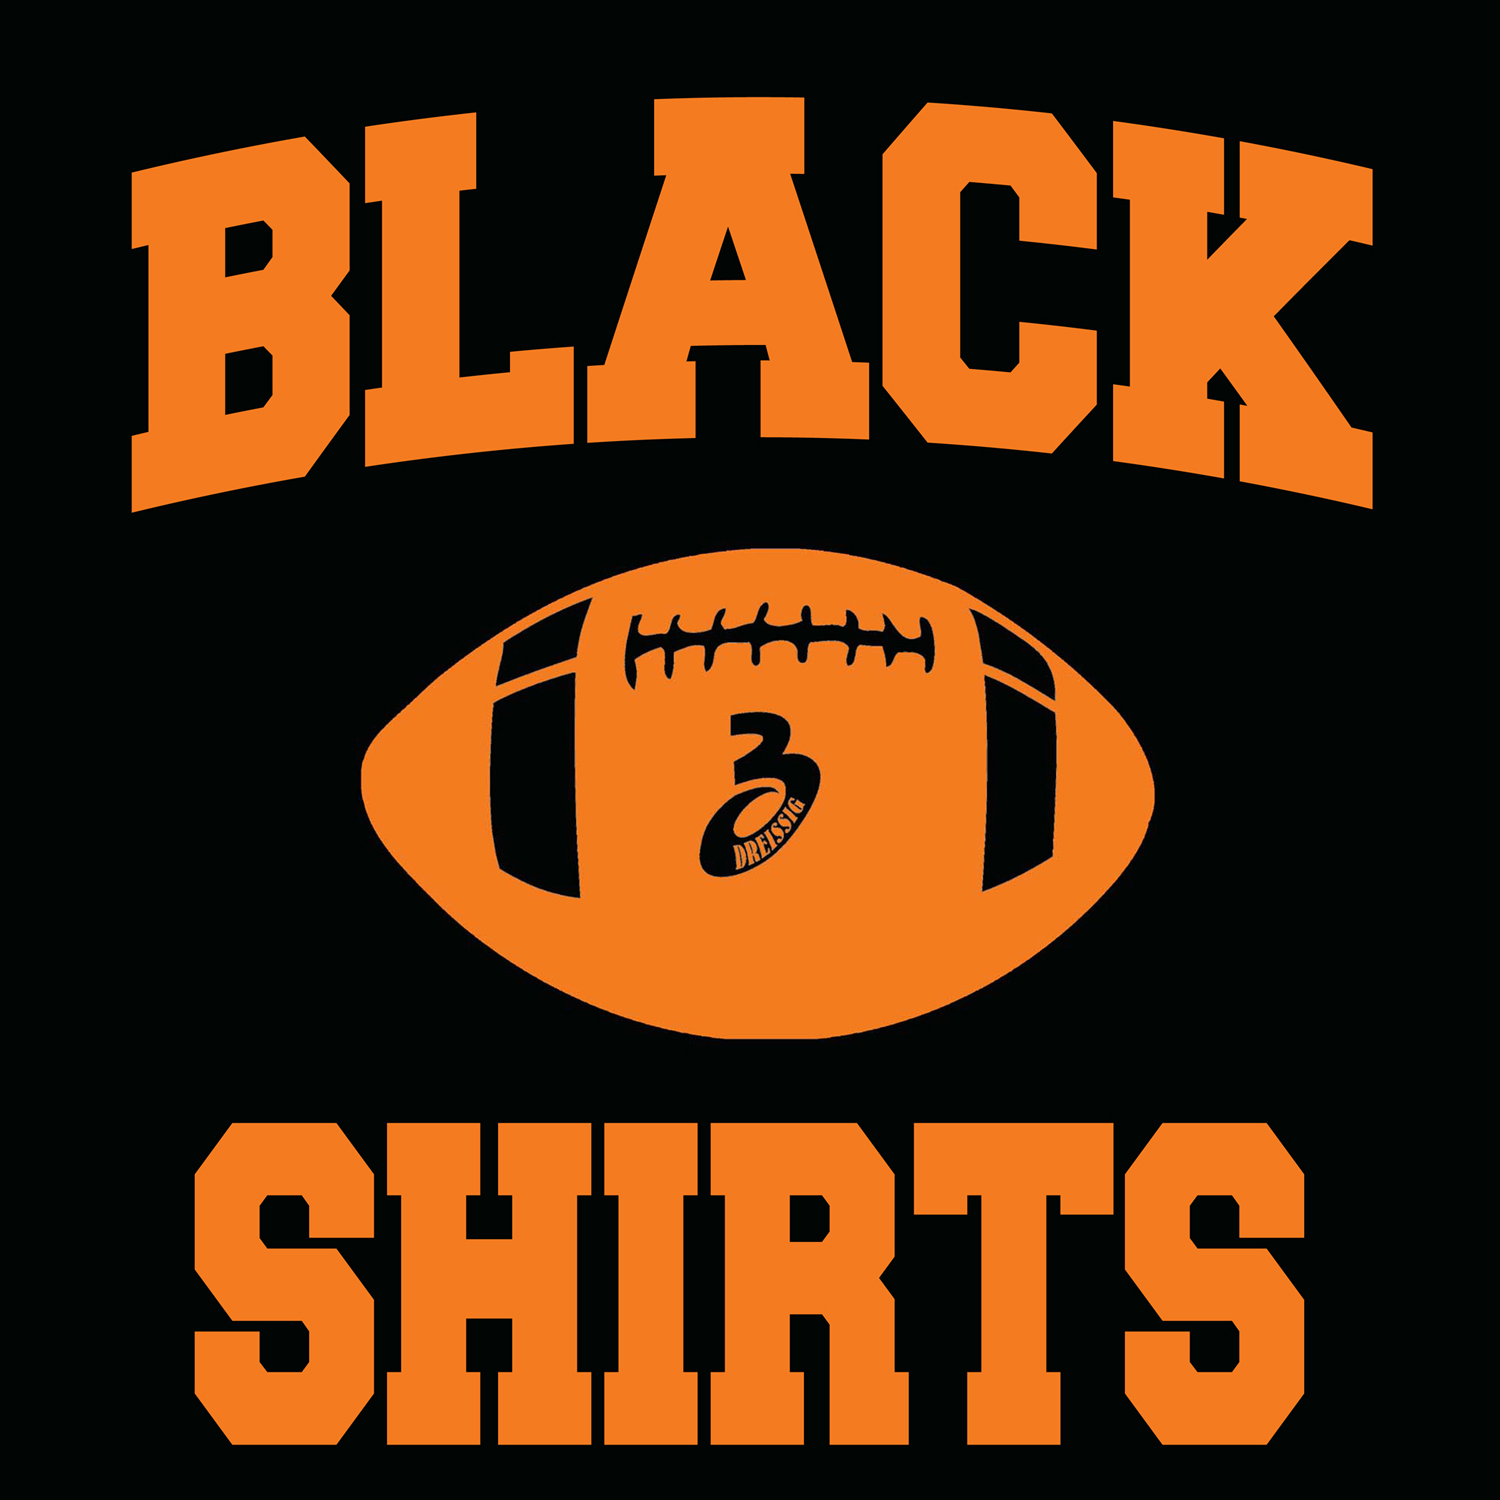 blackshirts_front.psd